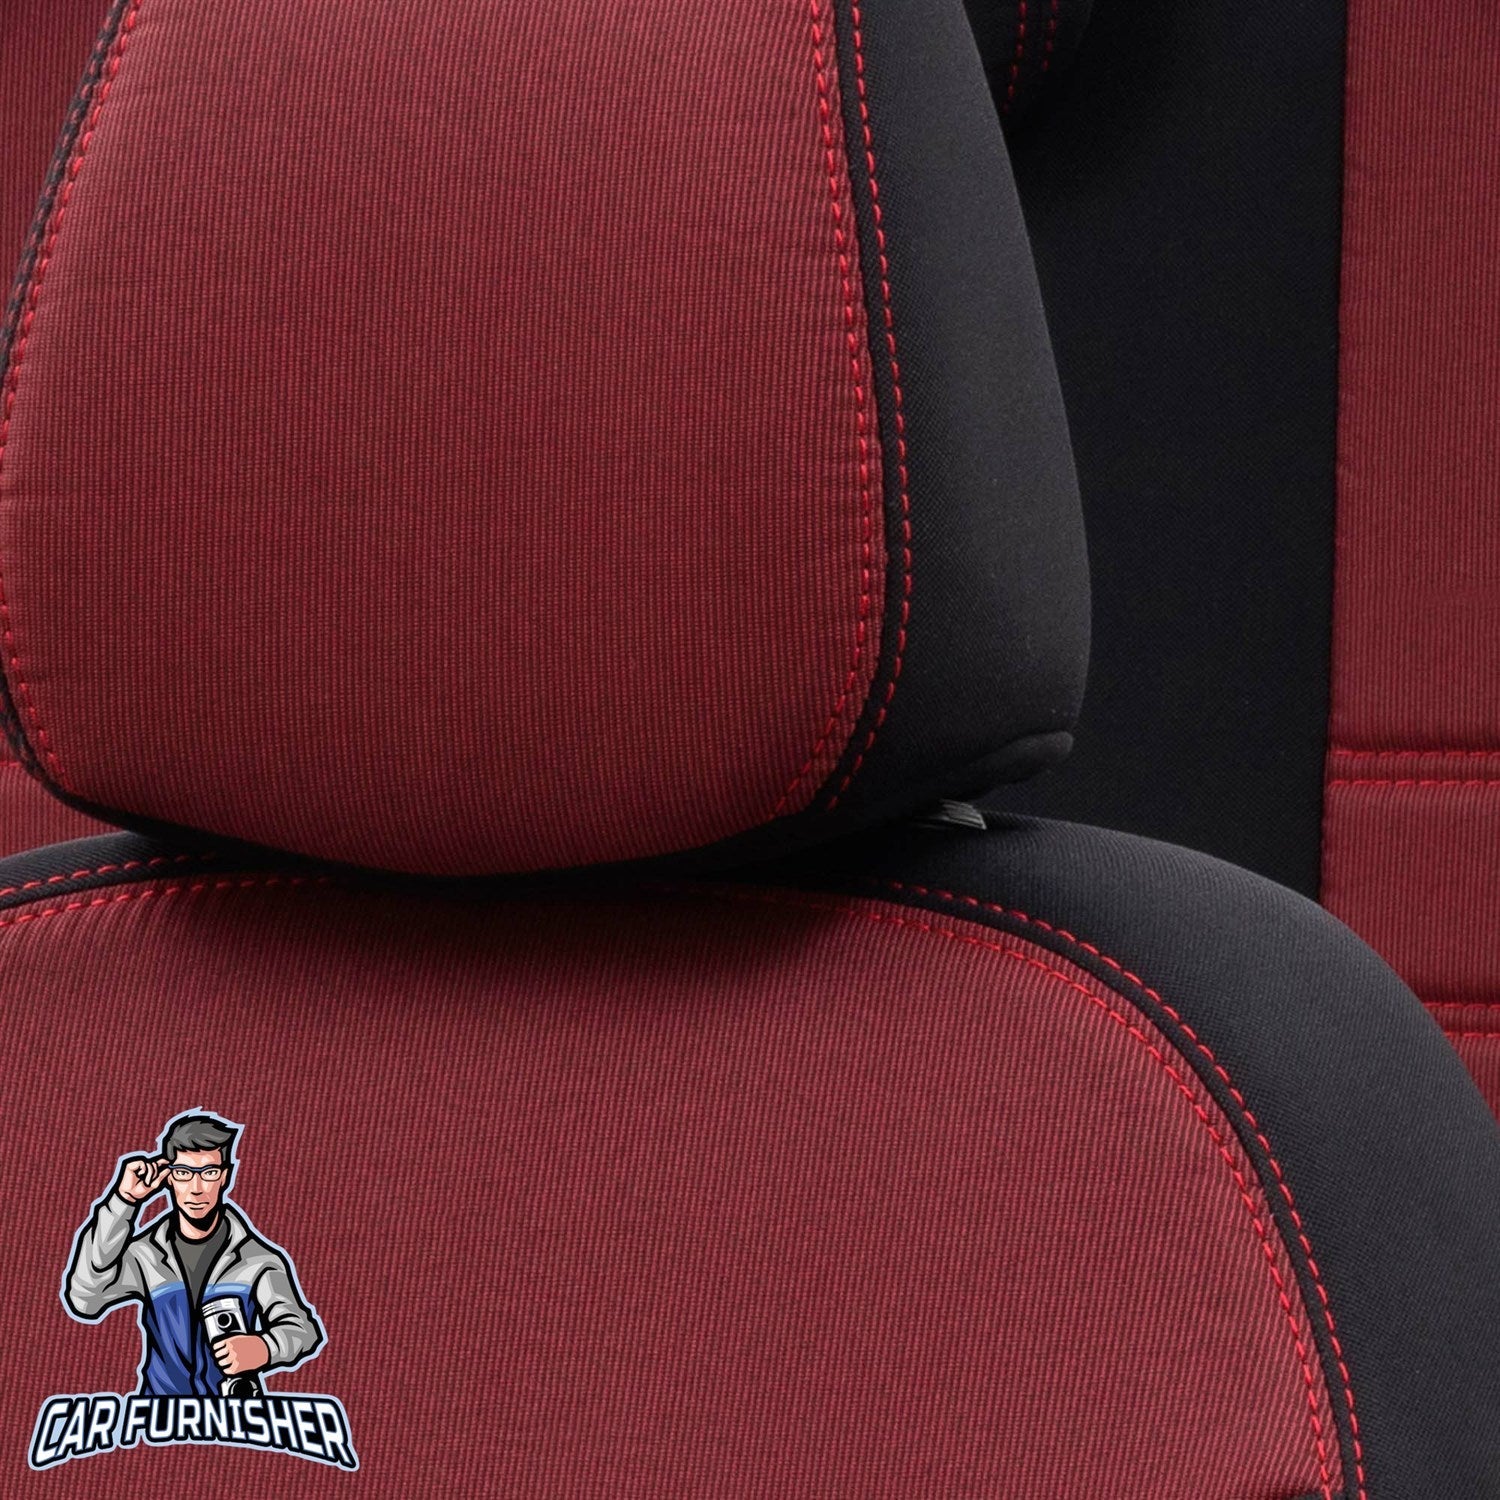 Mercedes E Class Seat Covers Original Jacquard Design Red Jacquard Fabric